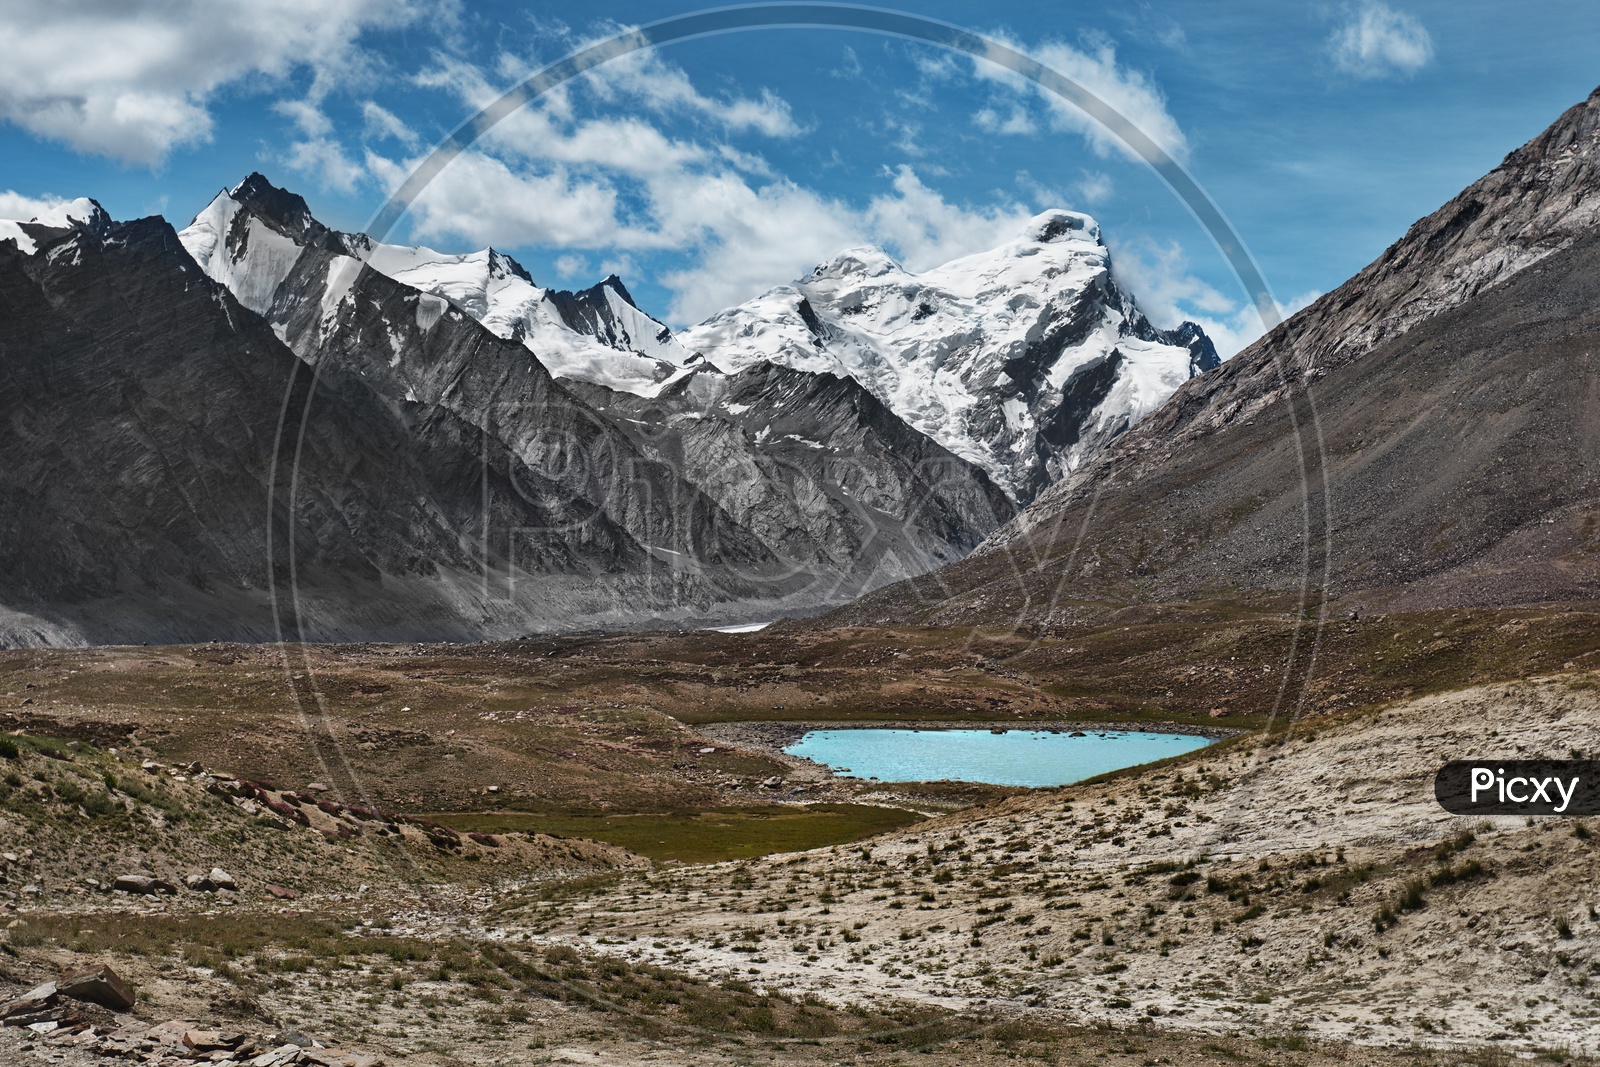 The Himalayas and a beautiful lake